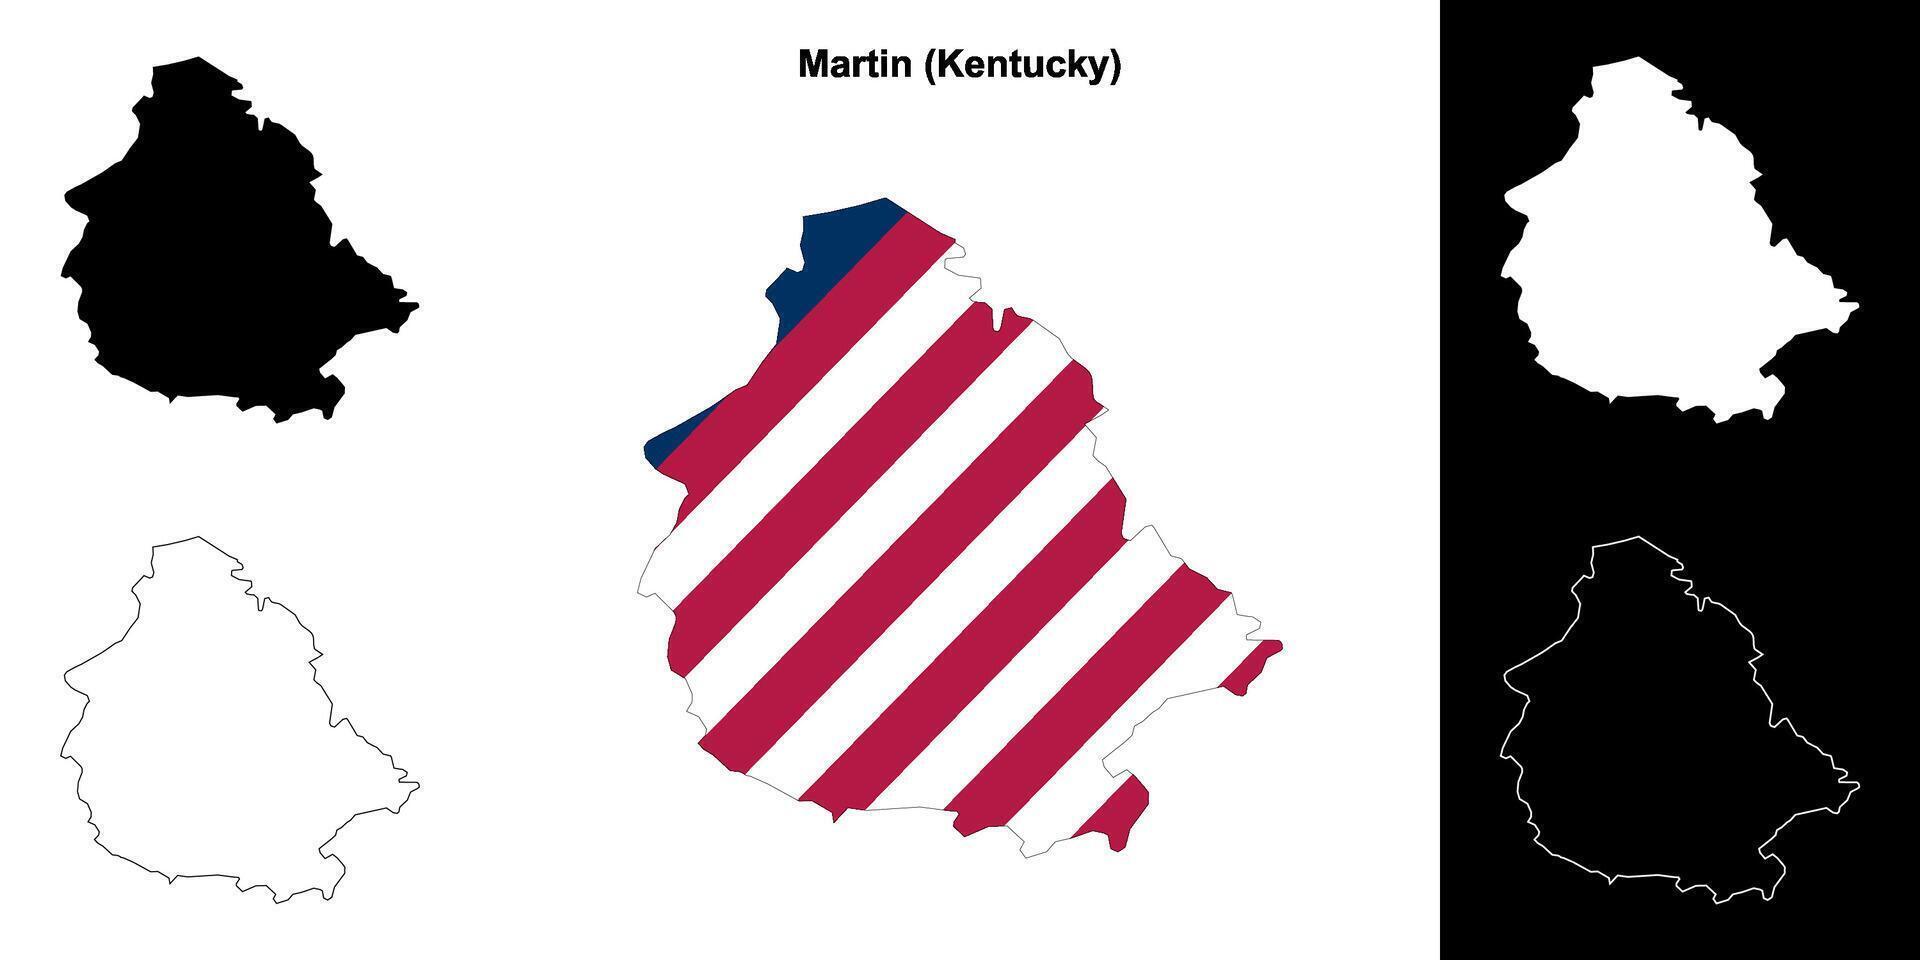 martin contea, Kentucky schema carta geografica impostato vettore